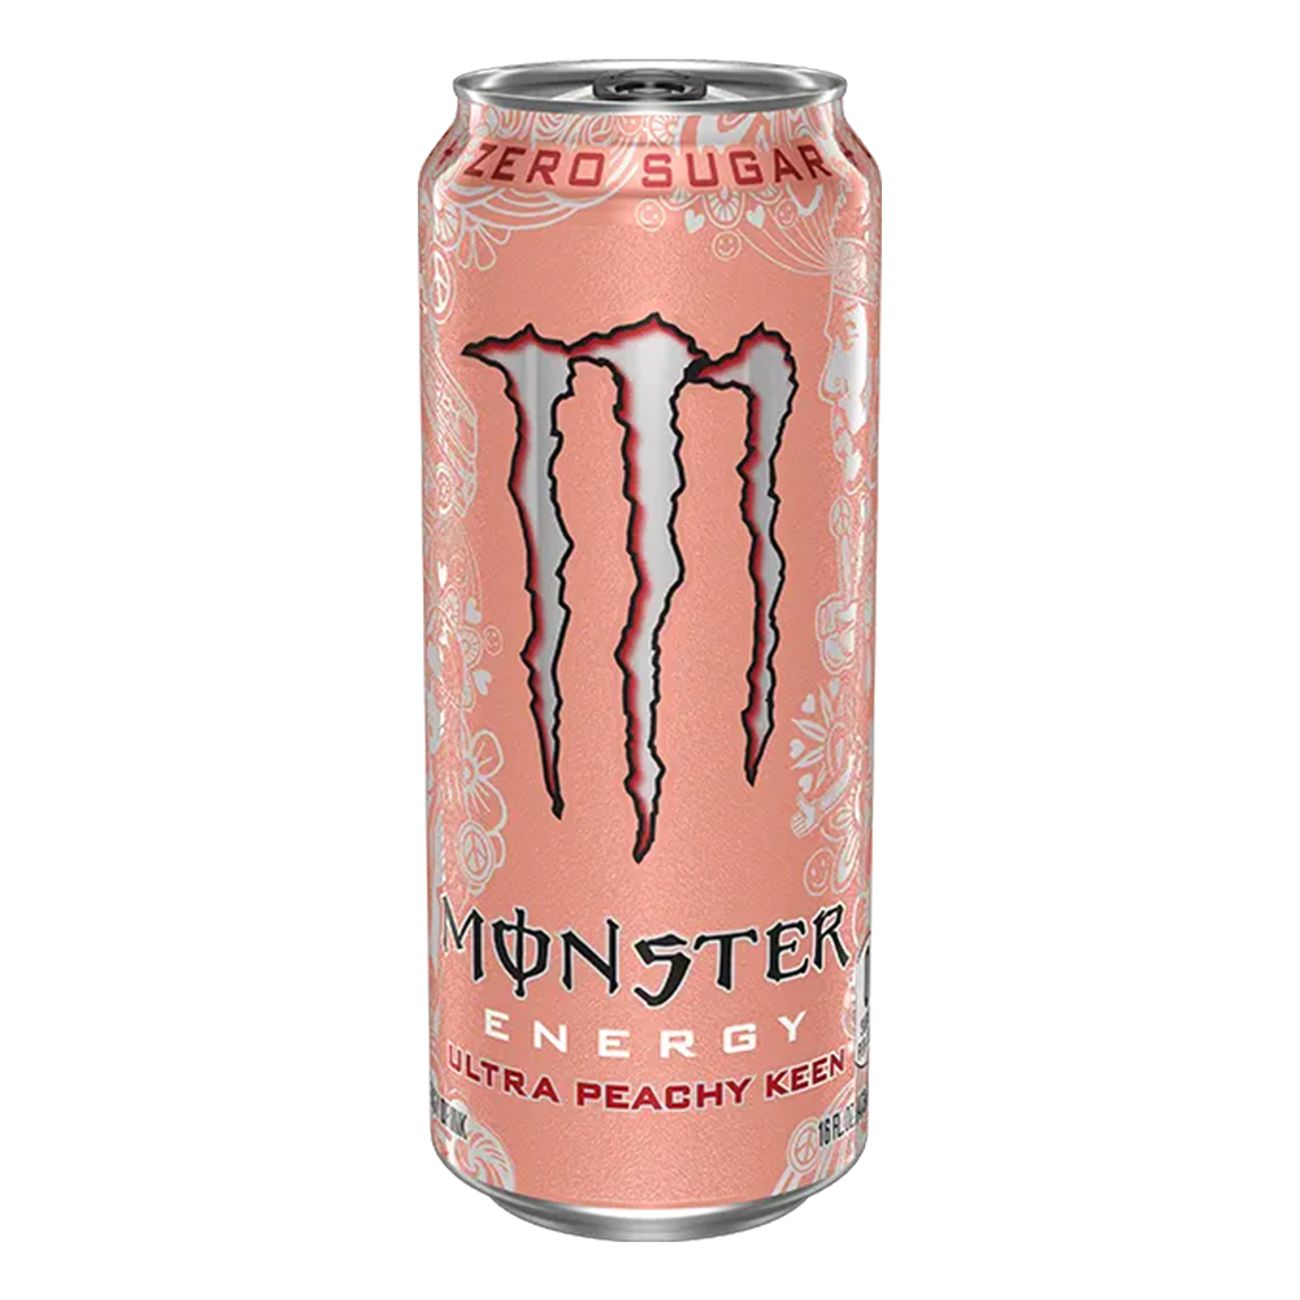 monster-energy-ultra-peachy-keen-99254-1